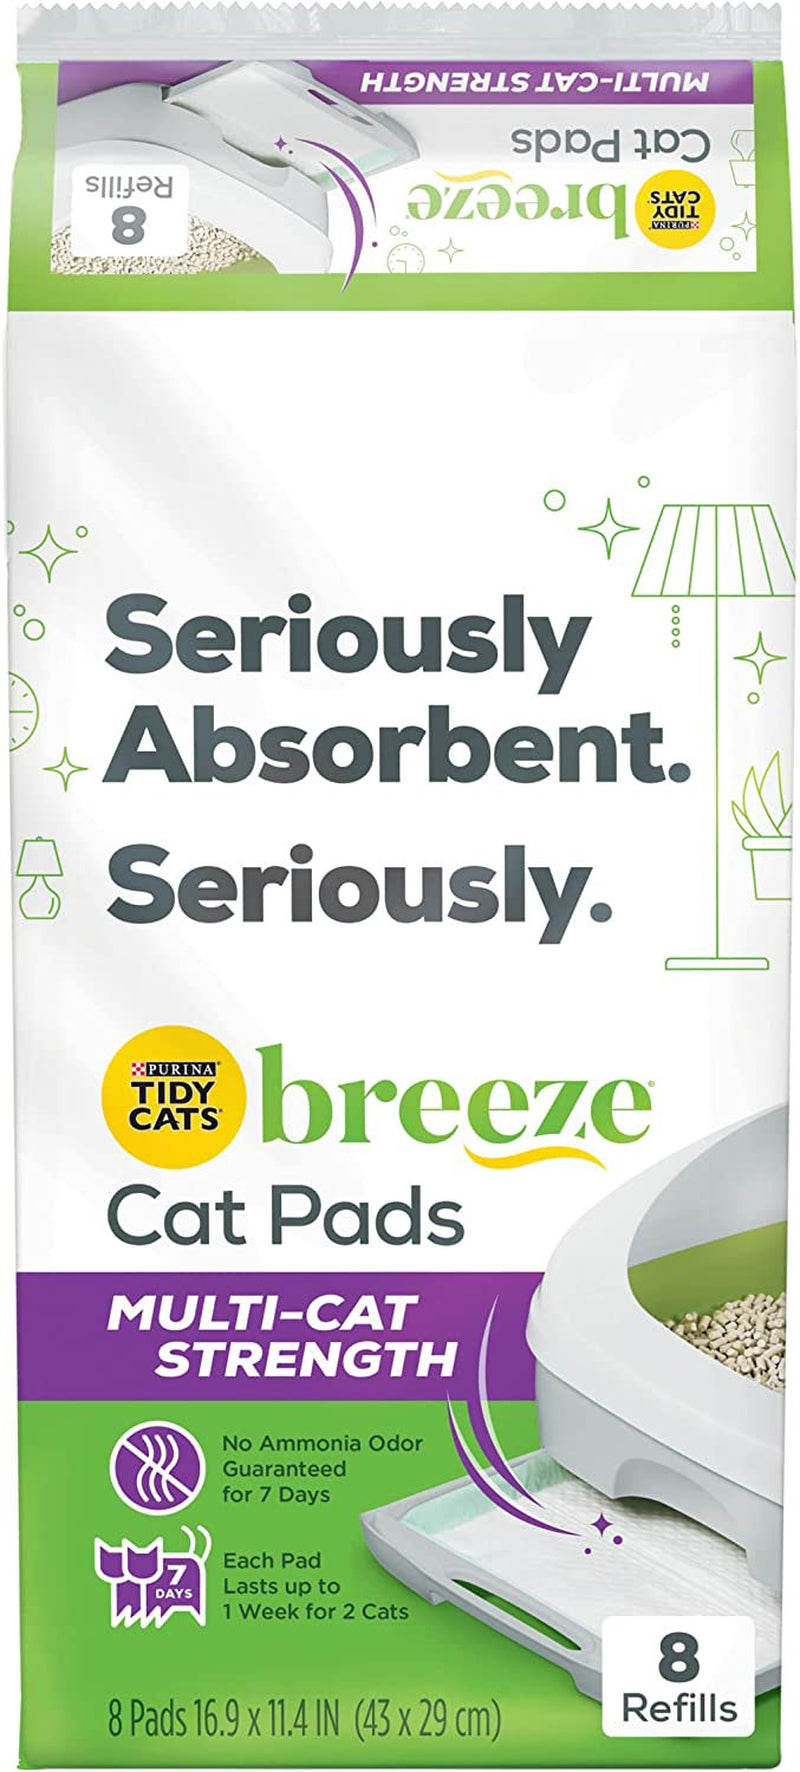 Purina Tidy Cats Breeze Litter System Cat Pad Refills, Breeze Morning Fresh Scent 10Ct. Refill Pack - 10 Ct. Box Animals & Pet Supplies > Pet Supplies > Cat Supplies > Cat Litter Tidy Cats Multi-Cat Strength 8 ct. Bag 